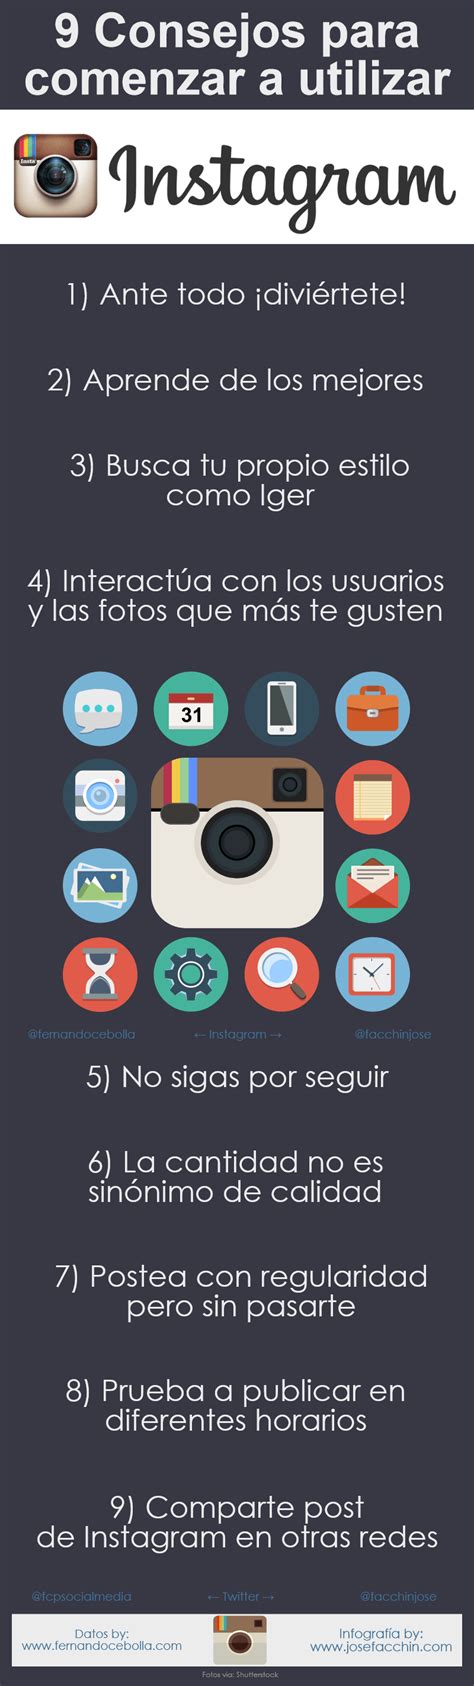 Consejos Para Comenzar A Usar Instagram Infografia Infographic Socialmedia Tics Y Formaci N